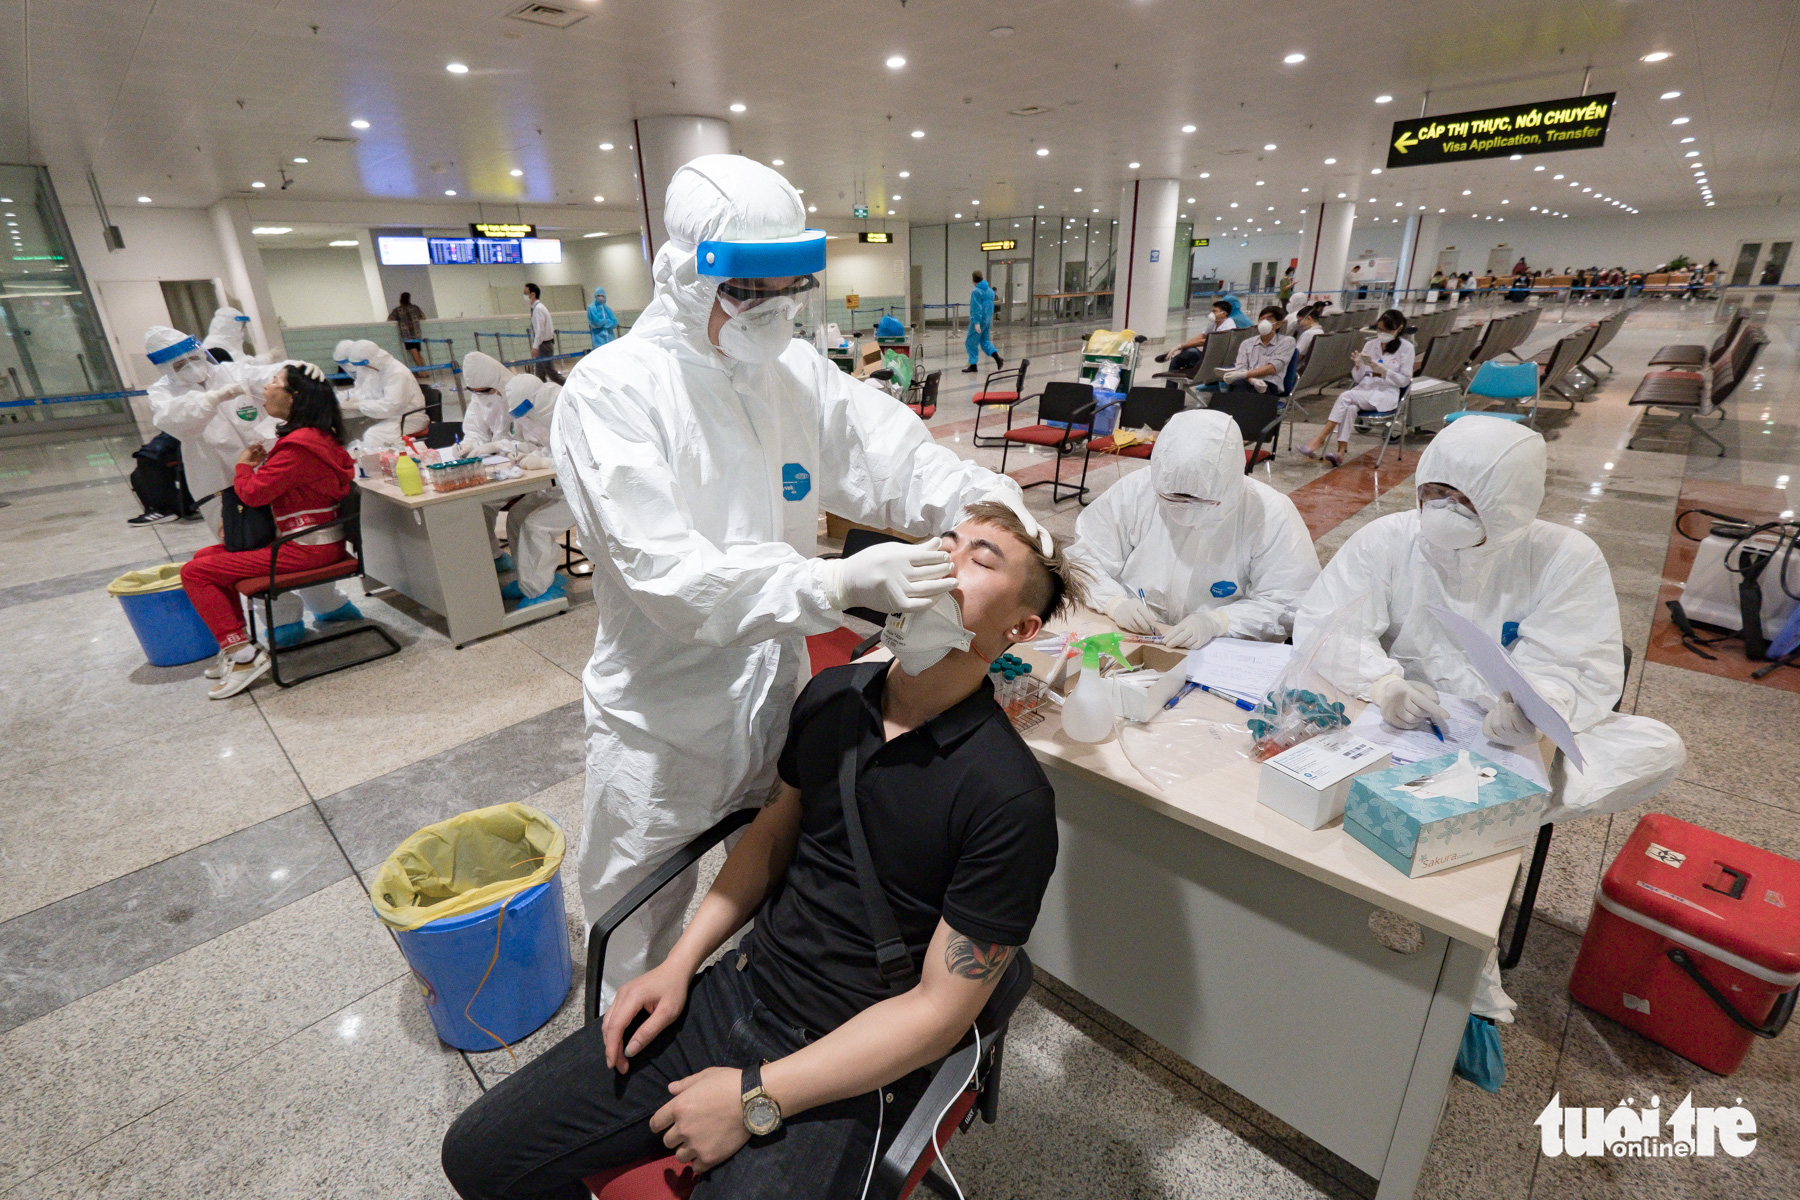 Health ministry scraps COVID-19 sampling at Hanoi airport over long waits